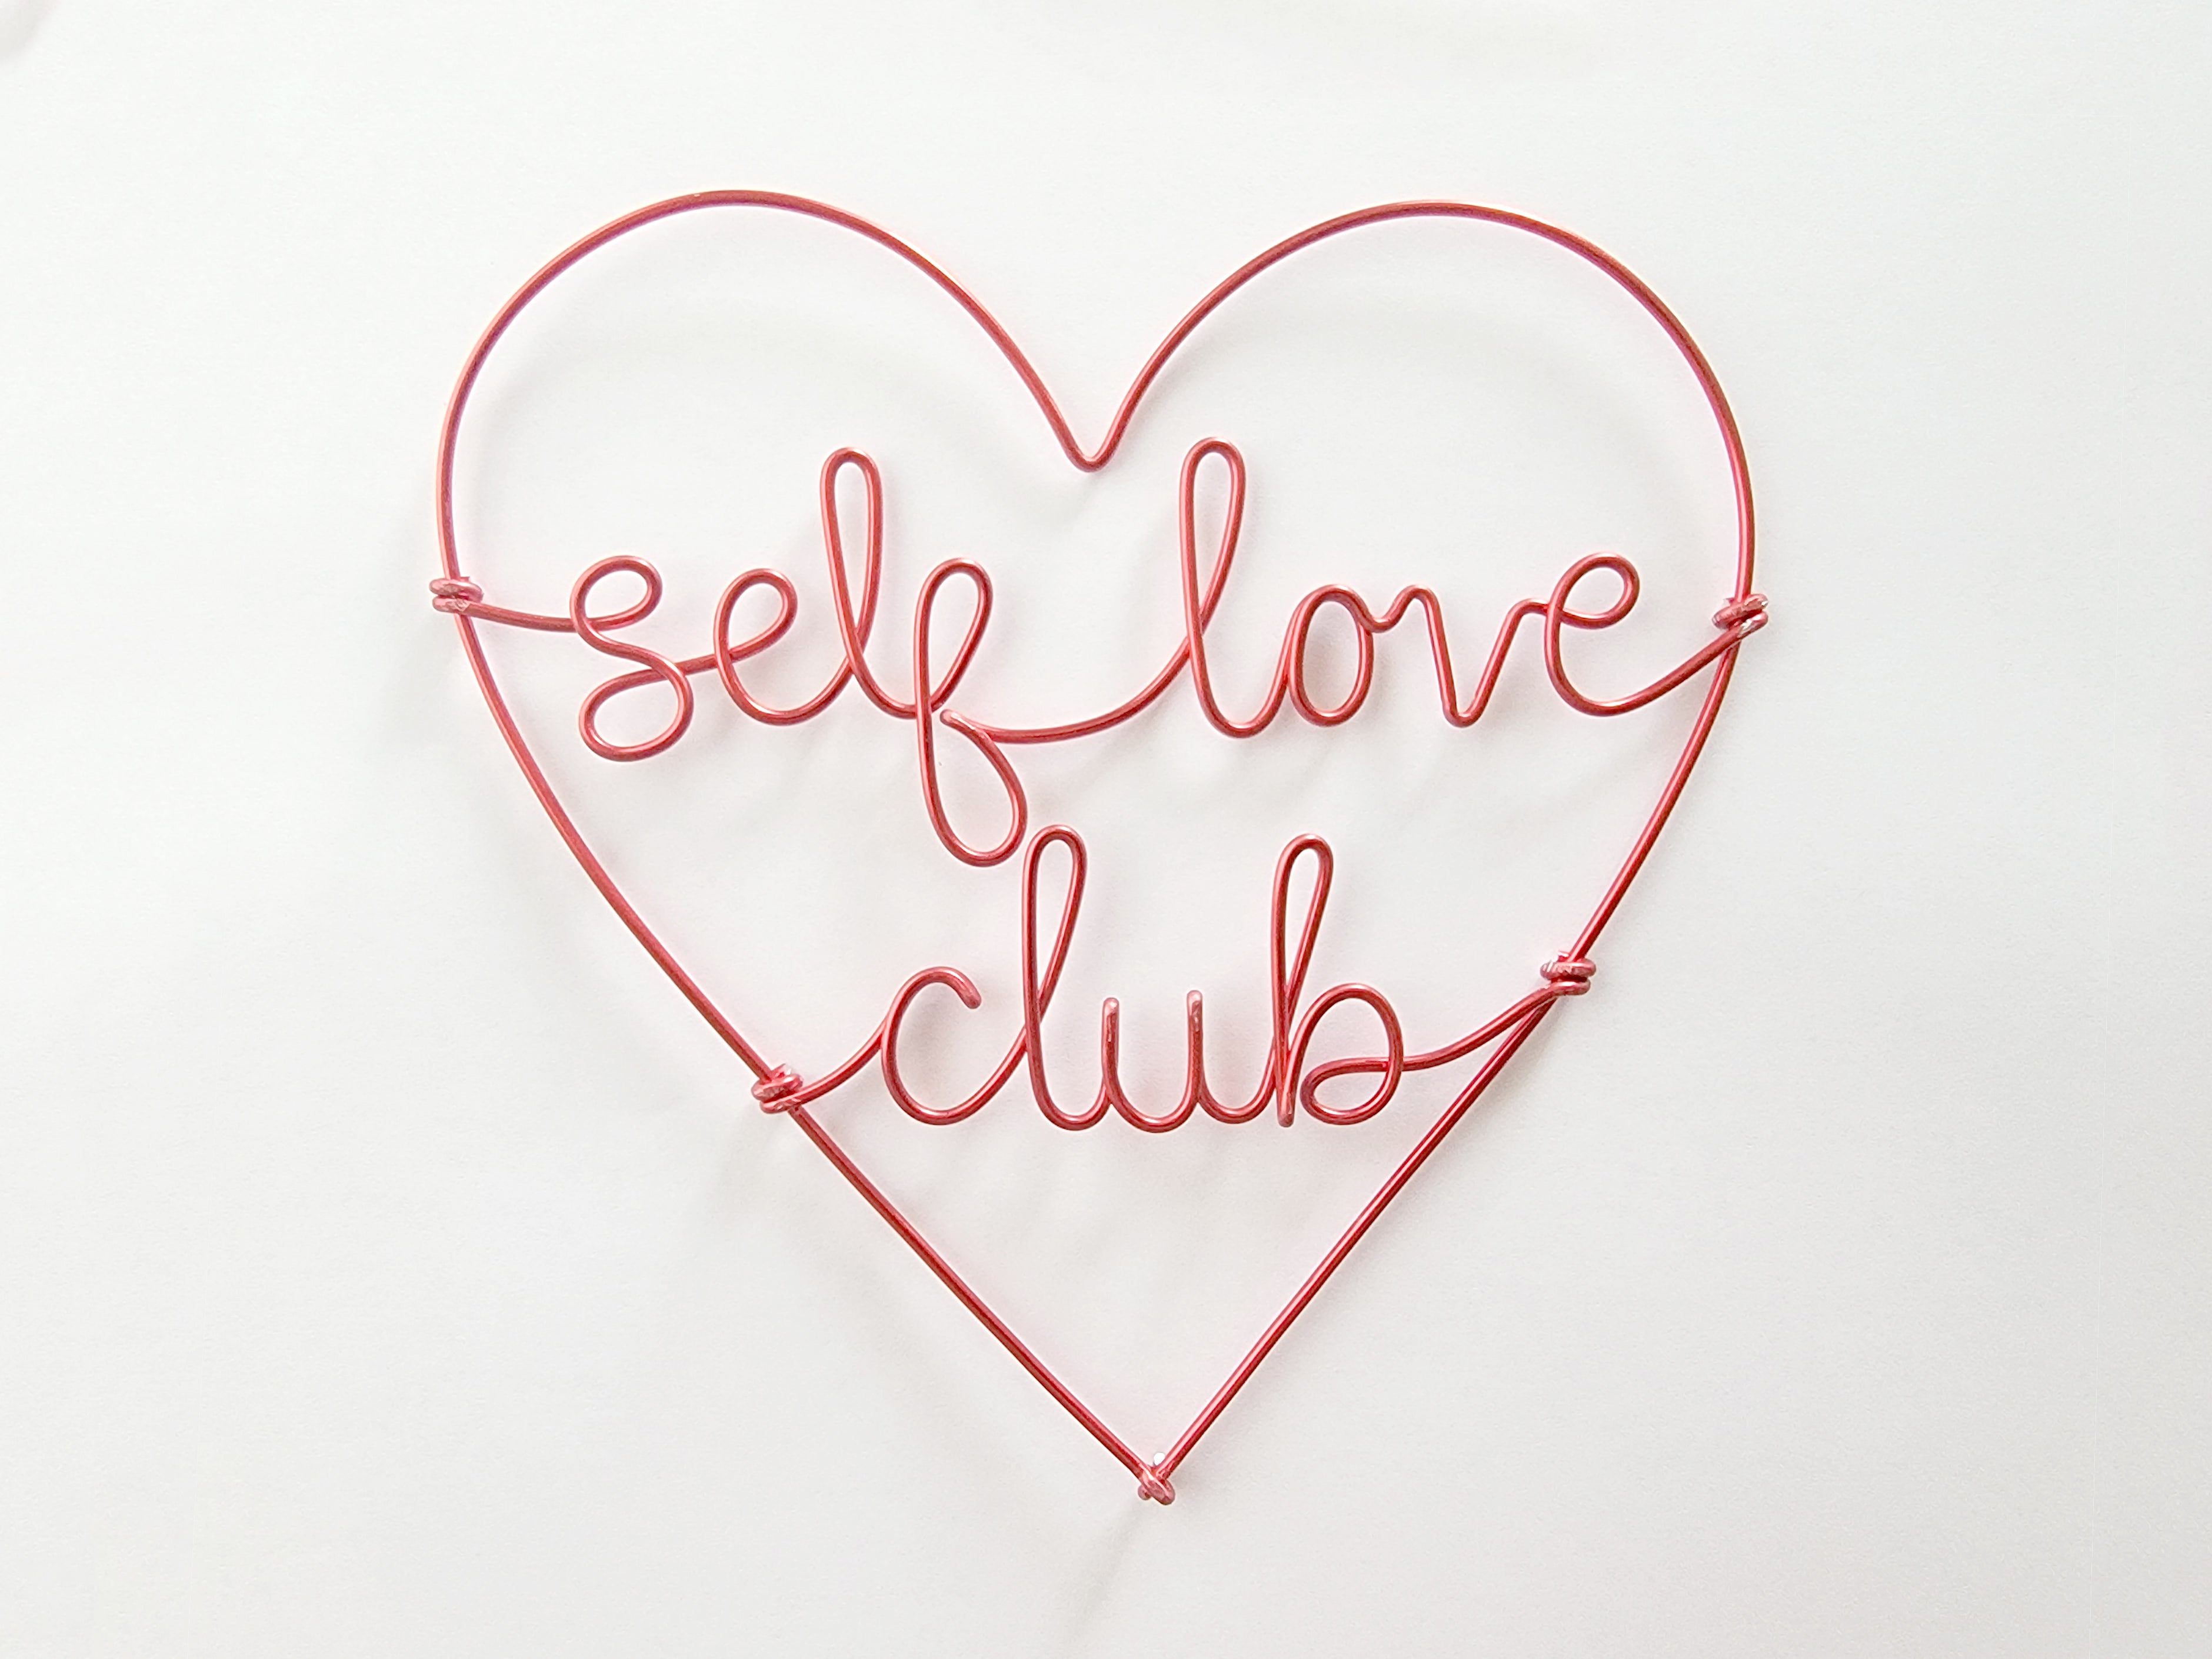 Self Love Club Wall Art